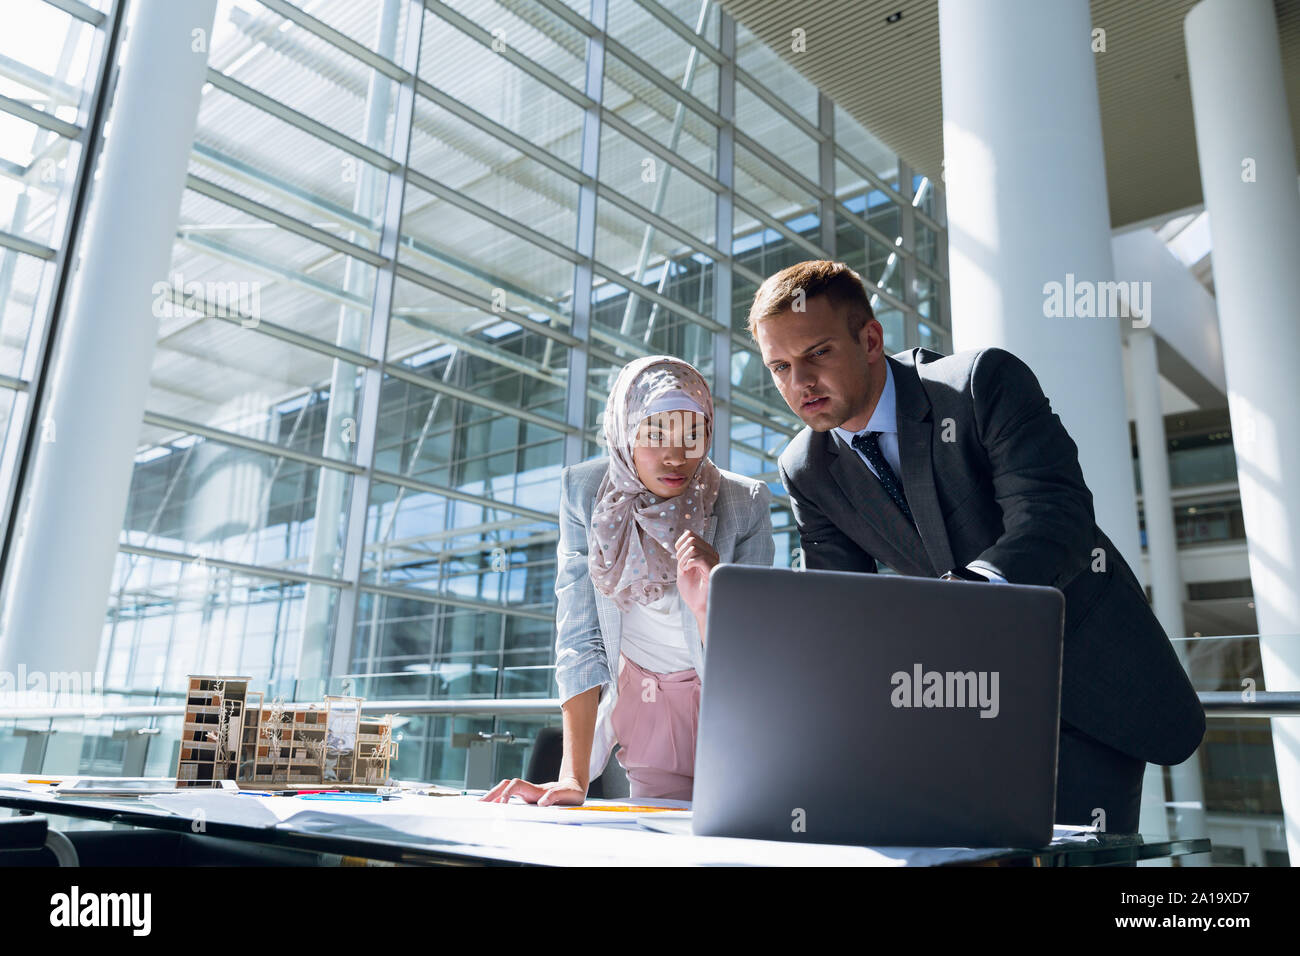 Hommes et femmes architectes discussing over laptop in office Banque D'Images